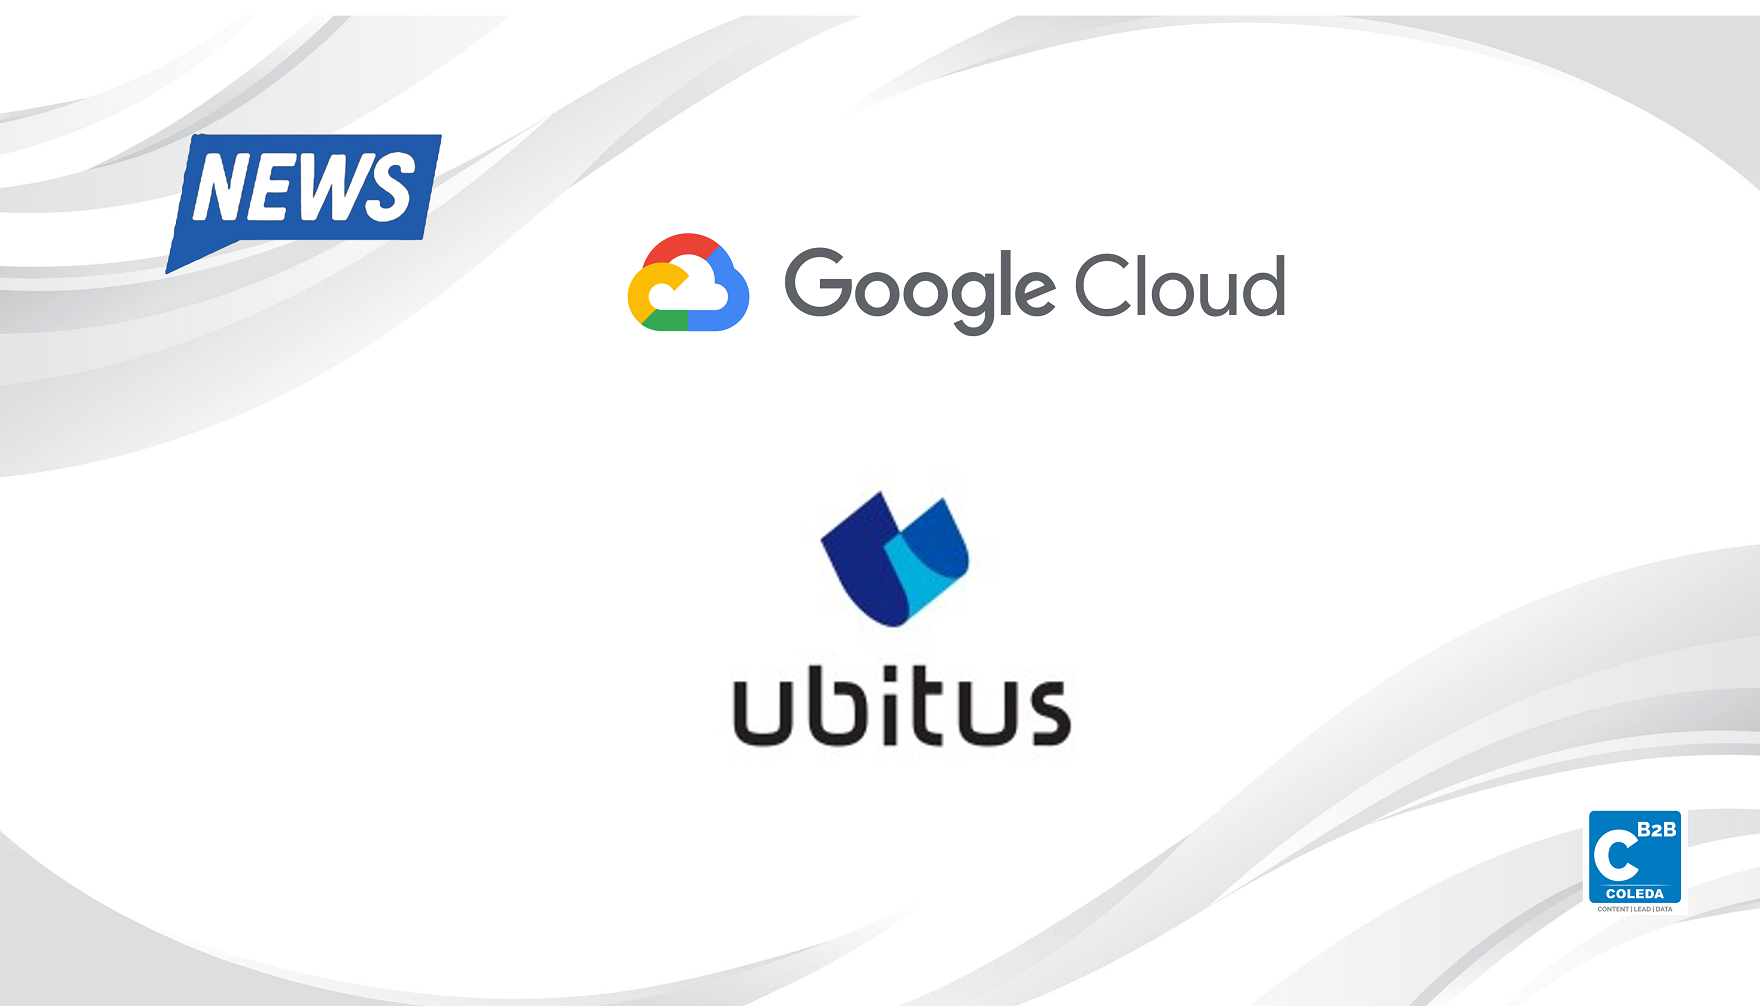 Google cloud collaborates with Ubitus